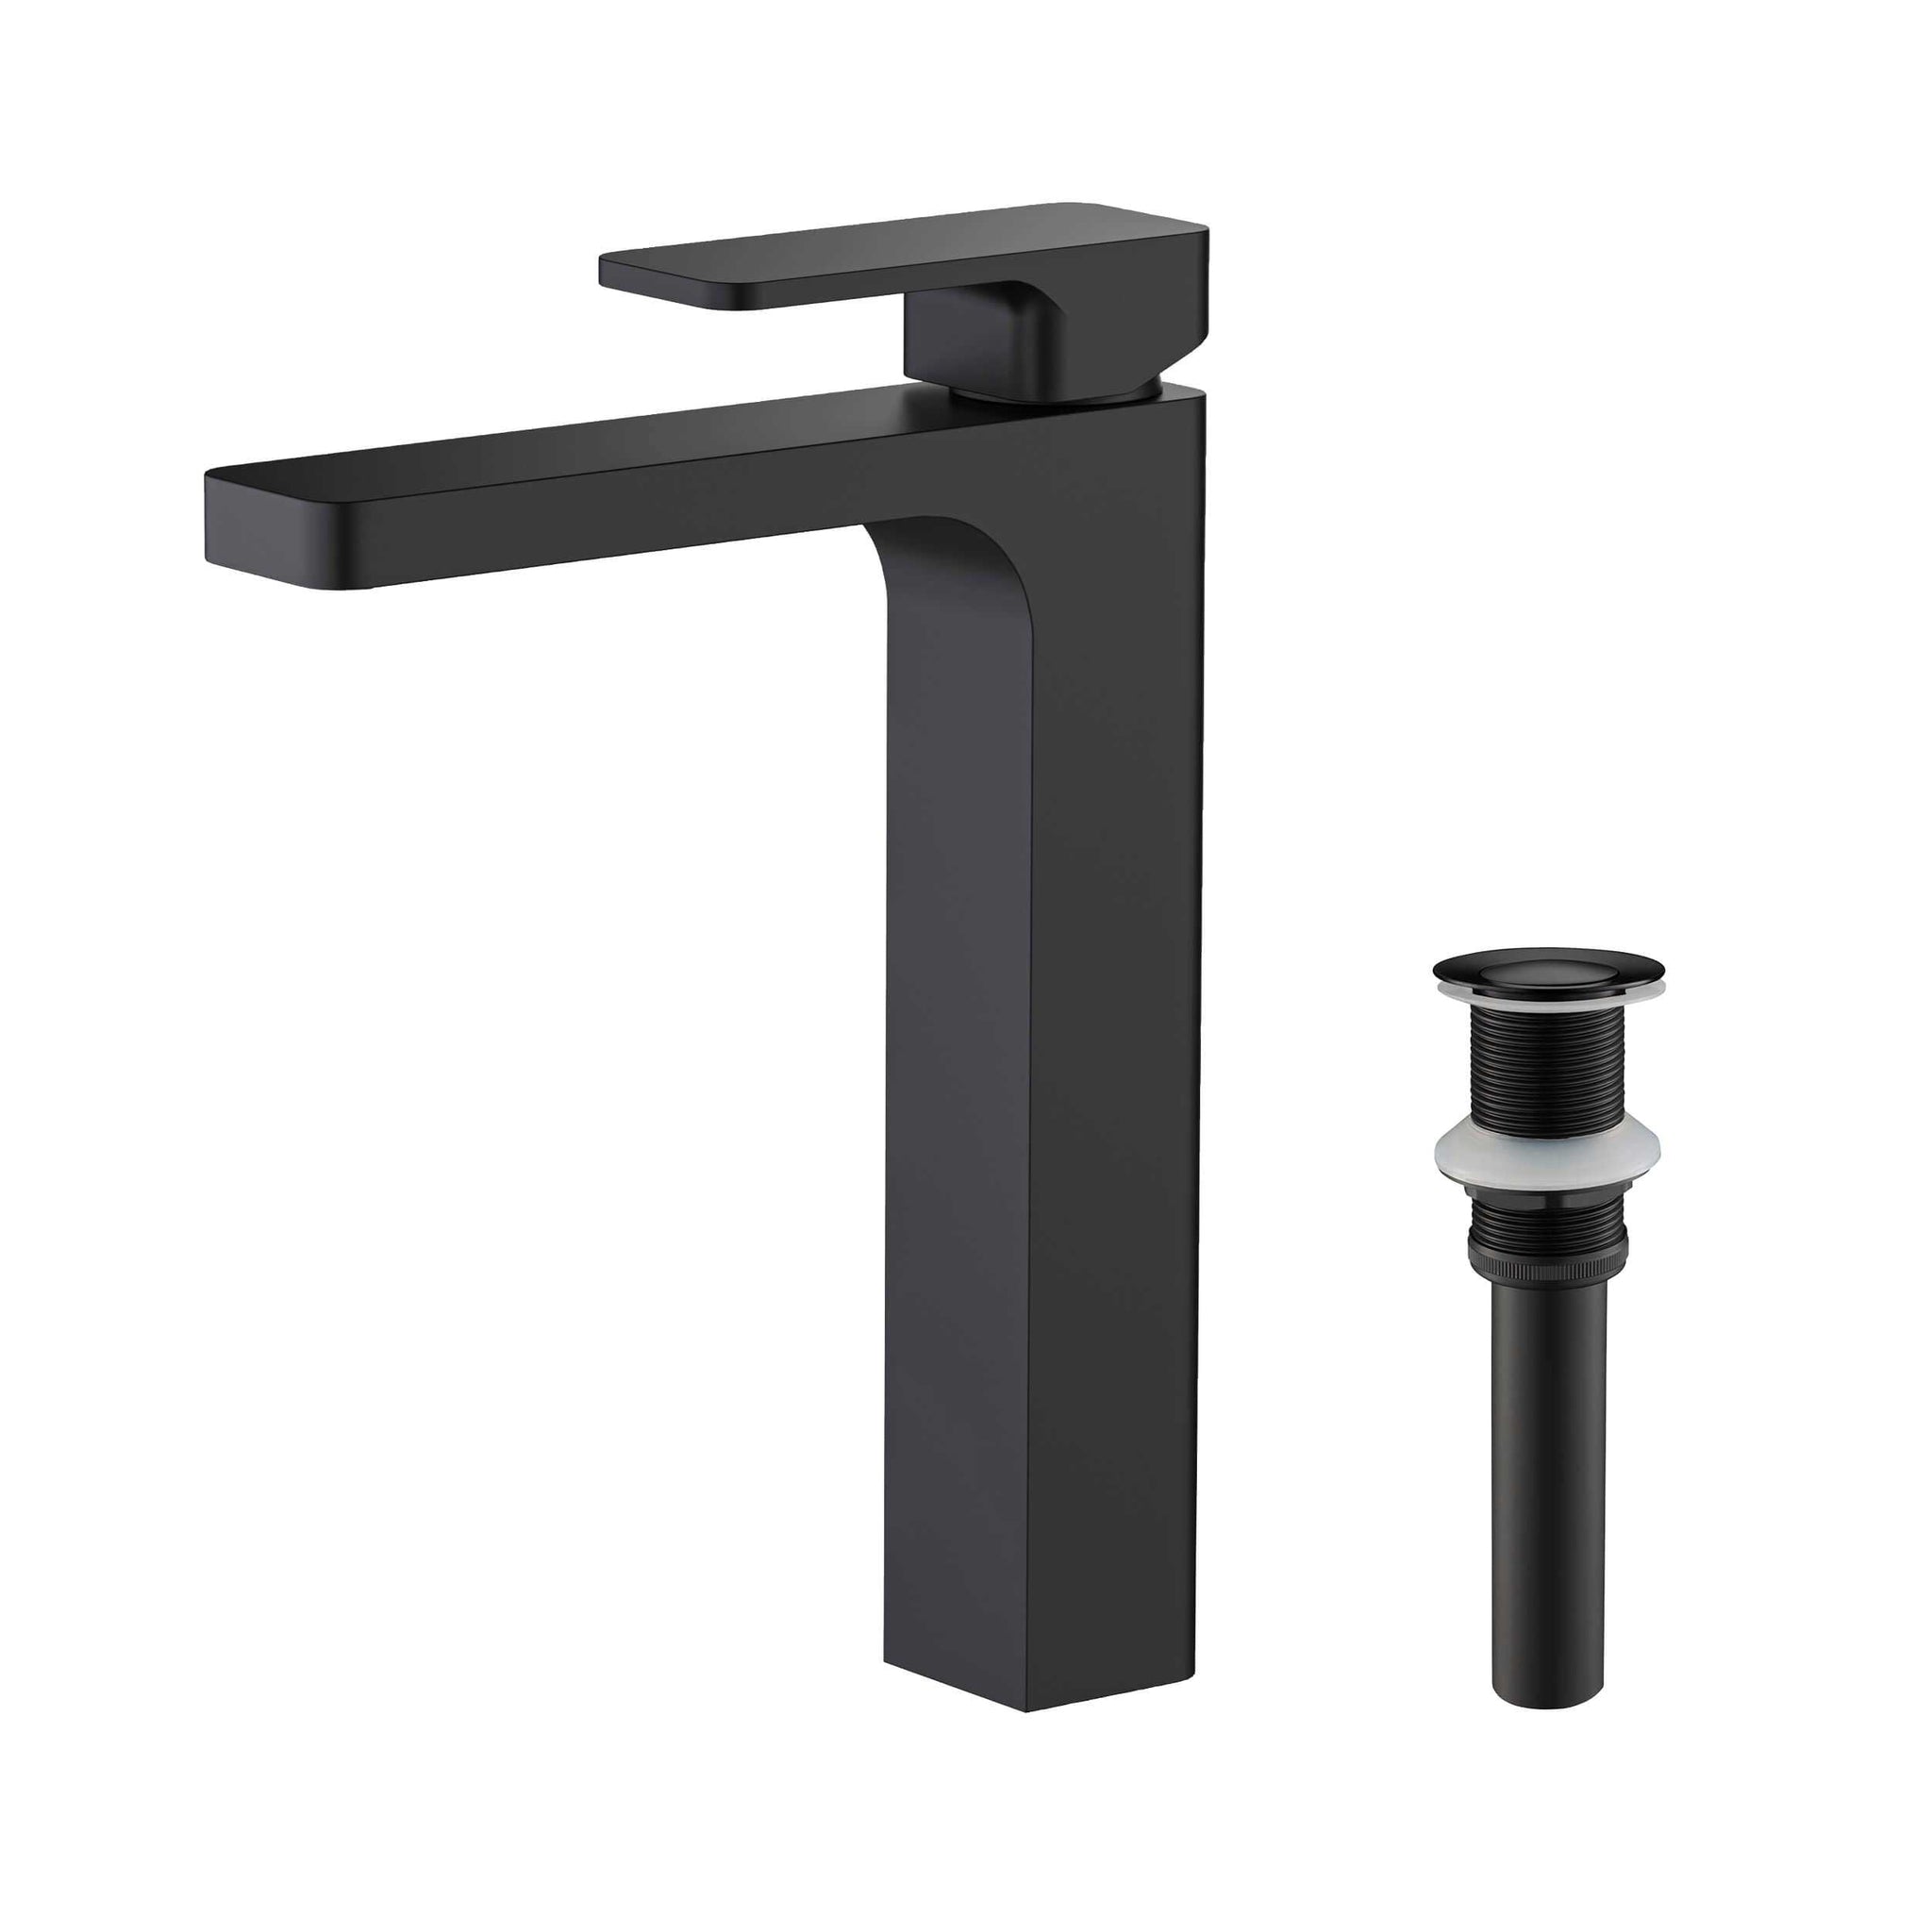 KIBI, KIBI Blaze-T Single Handle Matte Black Solid Brass Bathroom Vessel Sink Faucet With Pop-Up Drain Stopper Small Cover Without Overflow